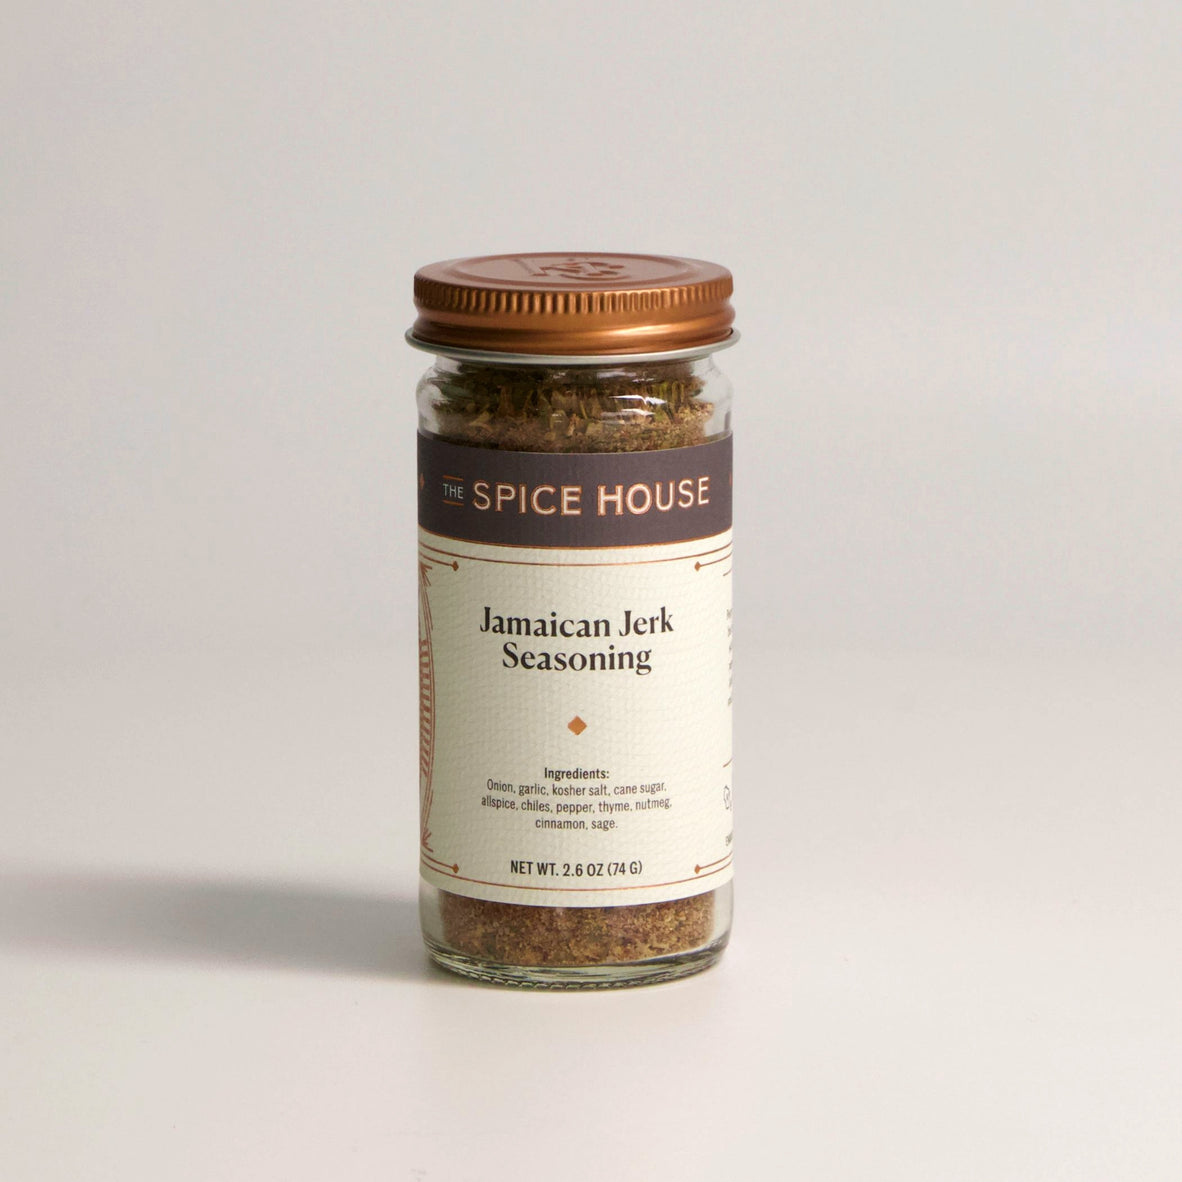 8 Pack of Louisiana Brand Original Hot Sauce Quality Ingredients Kosher 12  oz